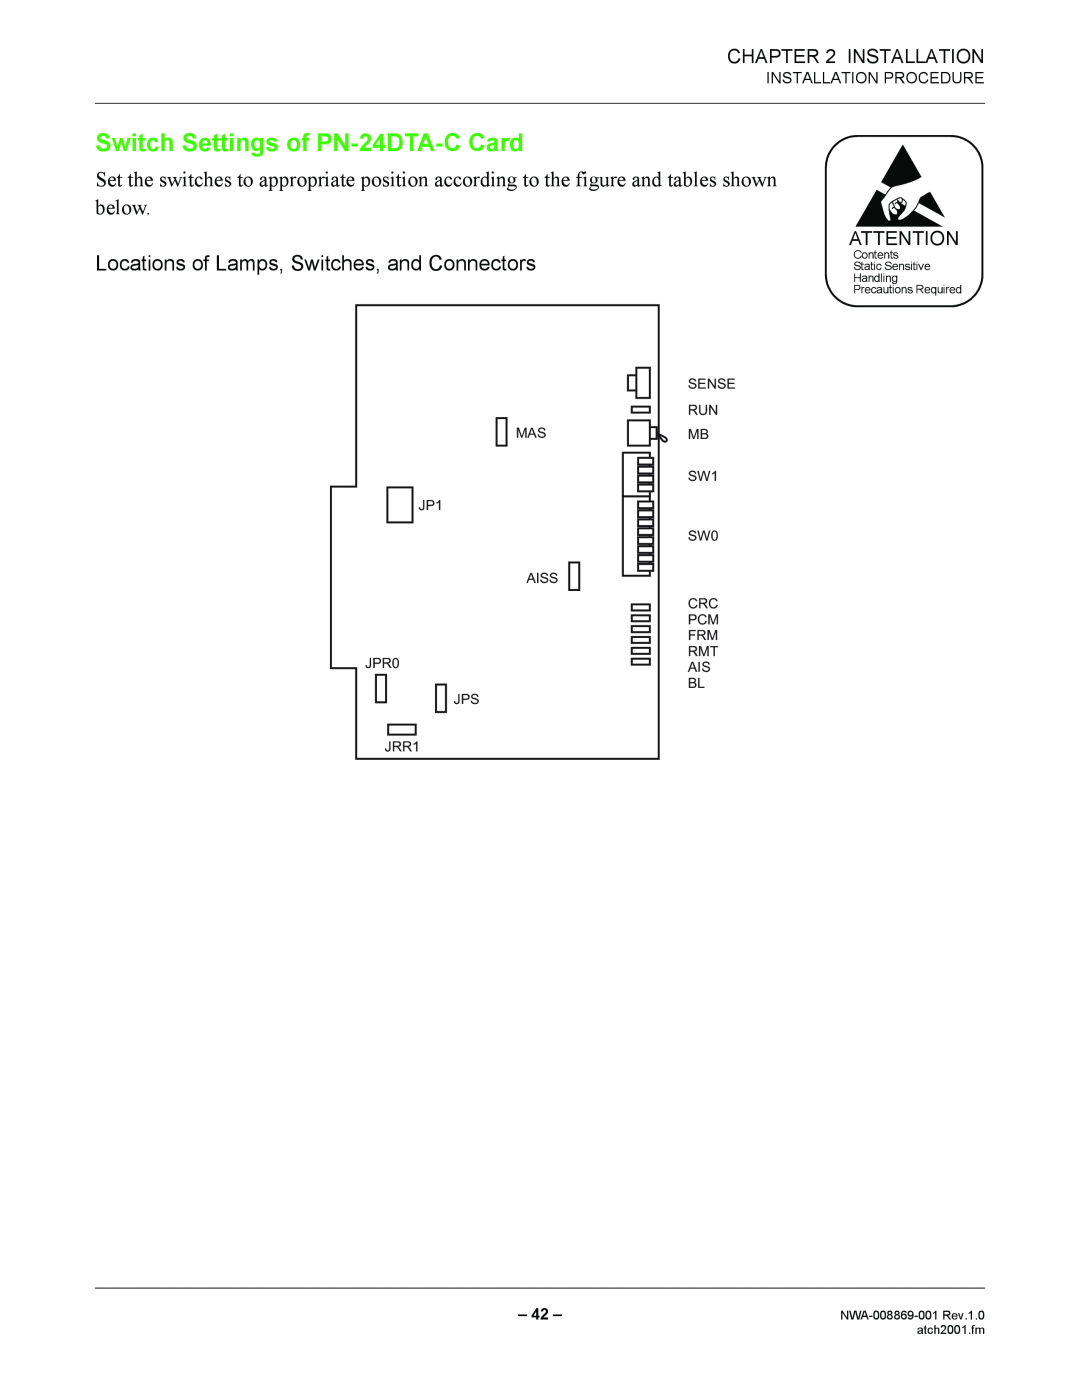 NEC NWA-008869-001 manual Switch Settings of PN-24DTA-C Card, Installation Procedure 